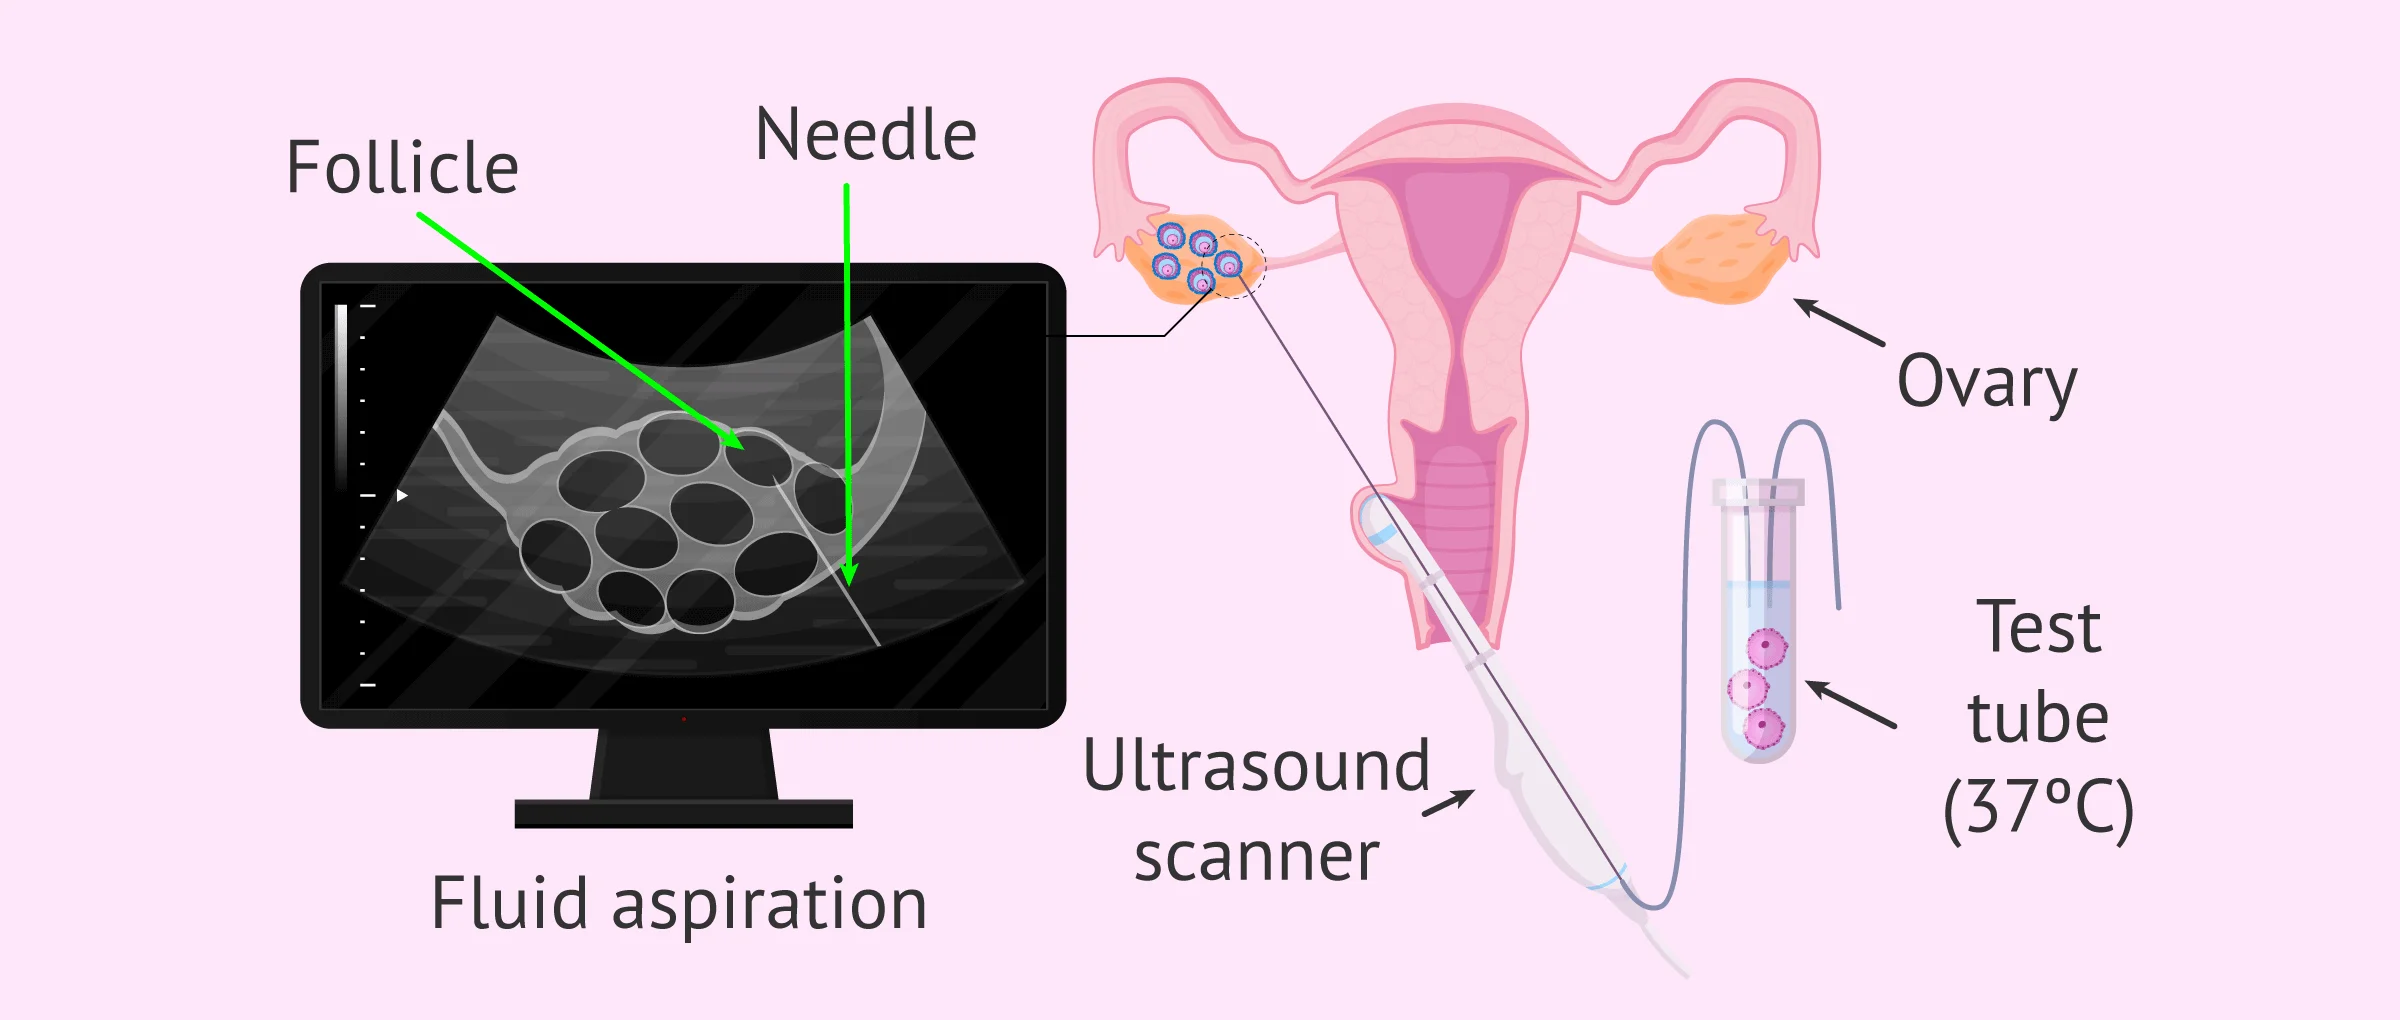 Follicular aspiration or ovarian puncture